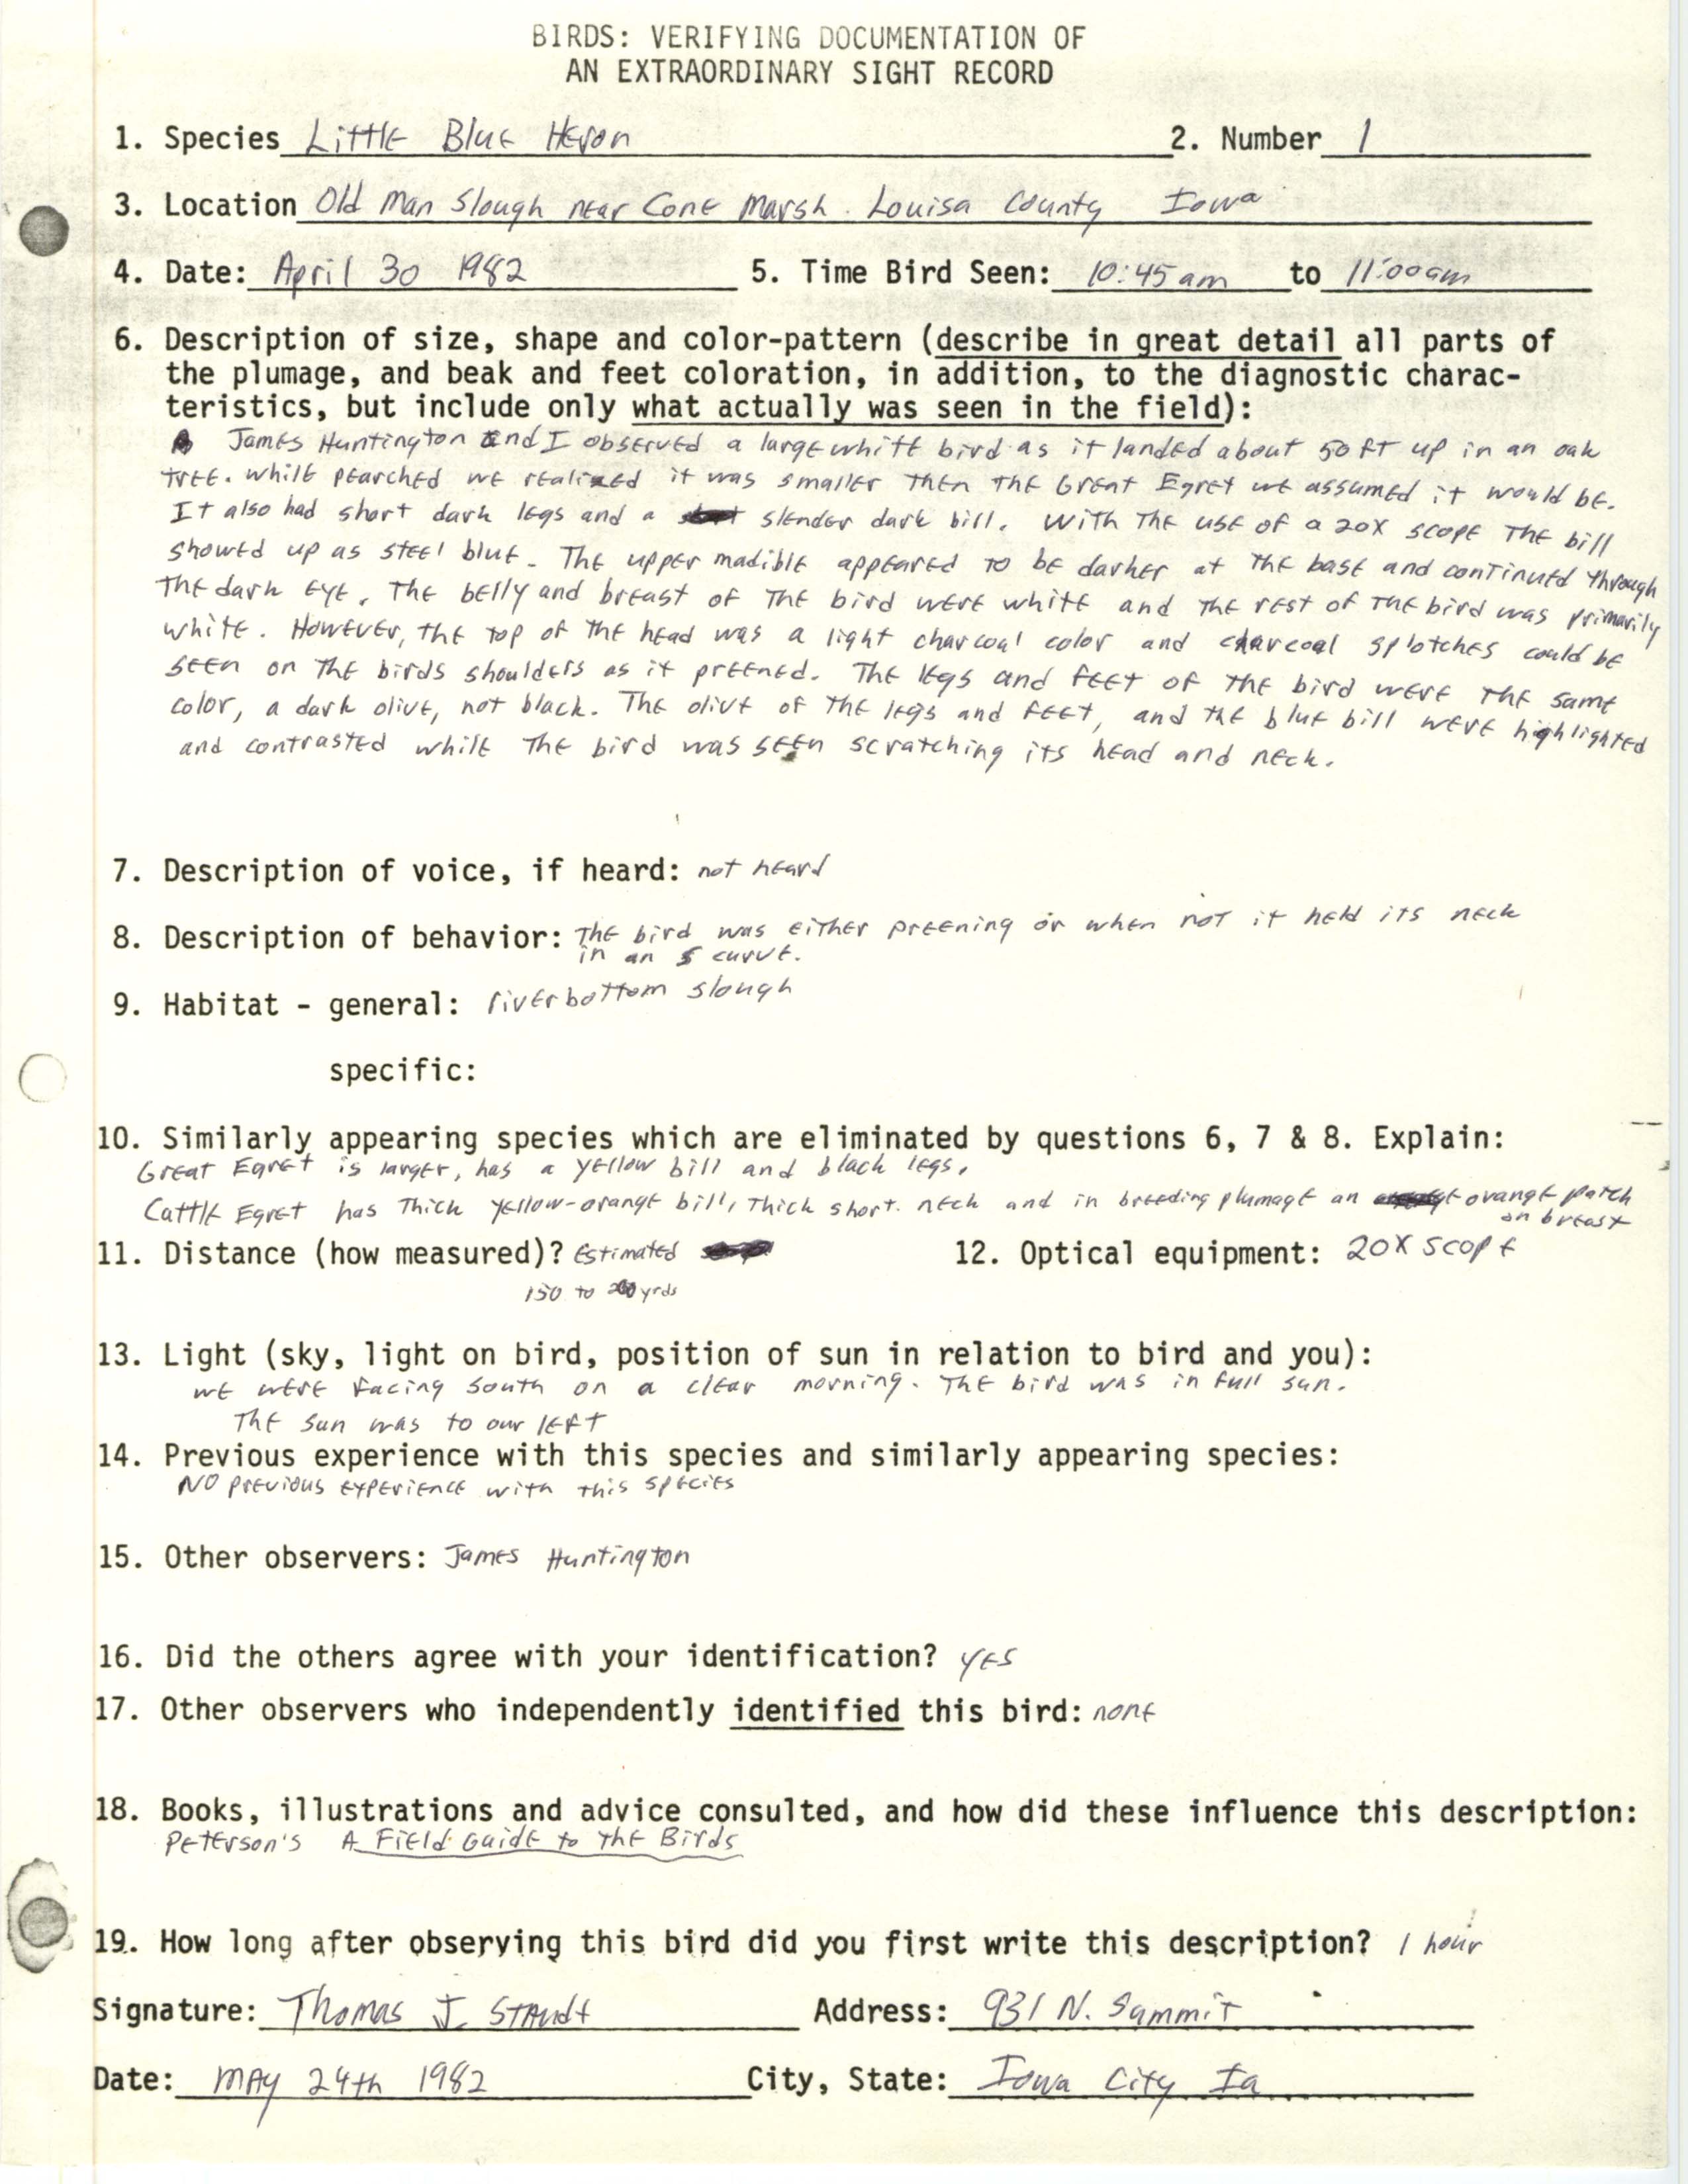 Rare bird documentation form for Little Blue Heron at Cone Marsh, 1982